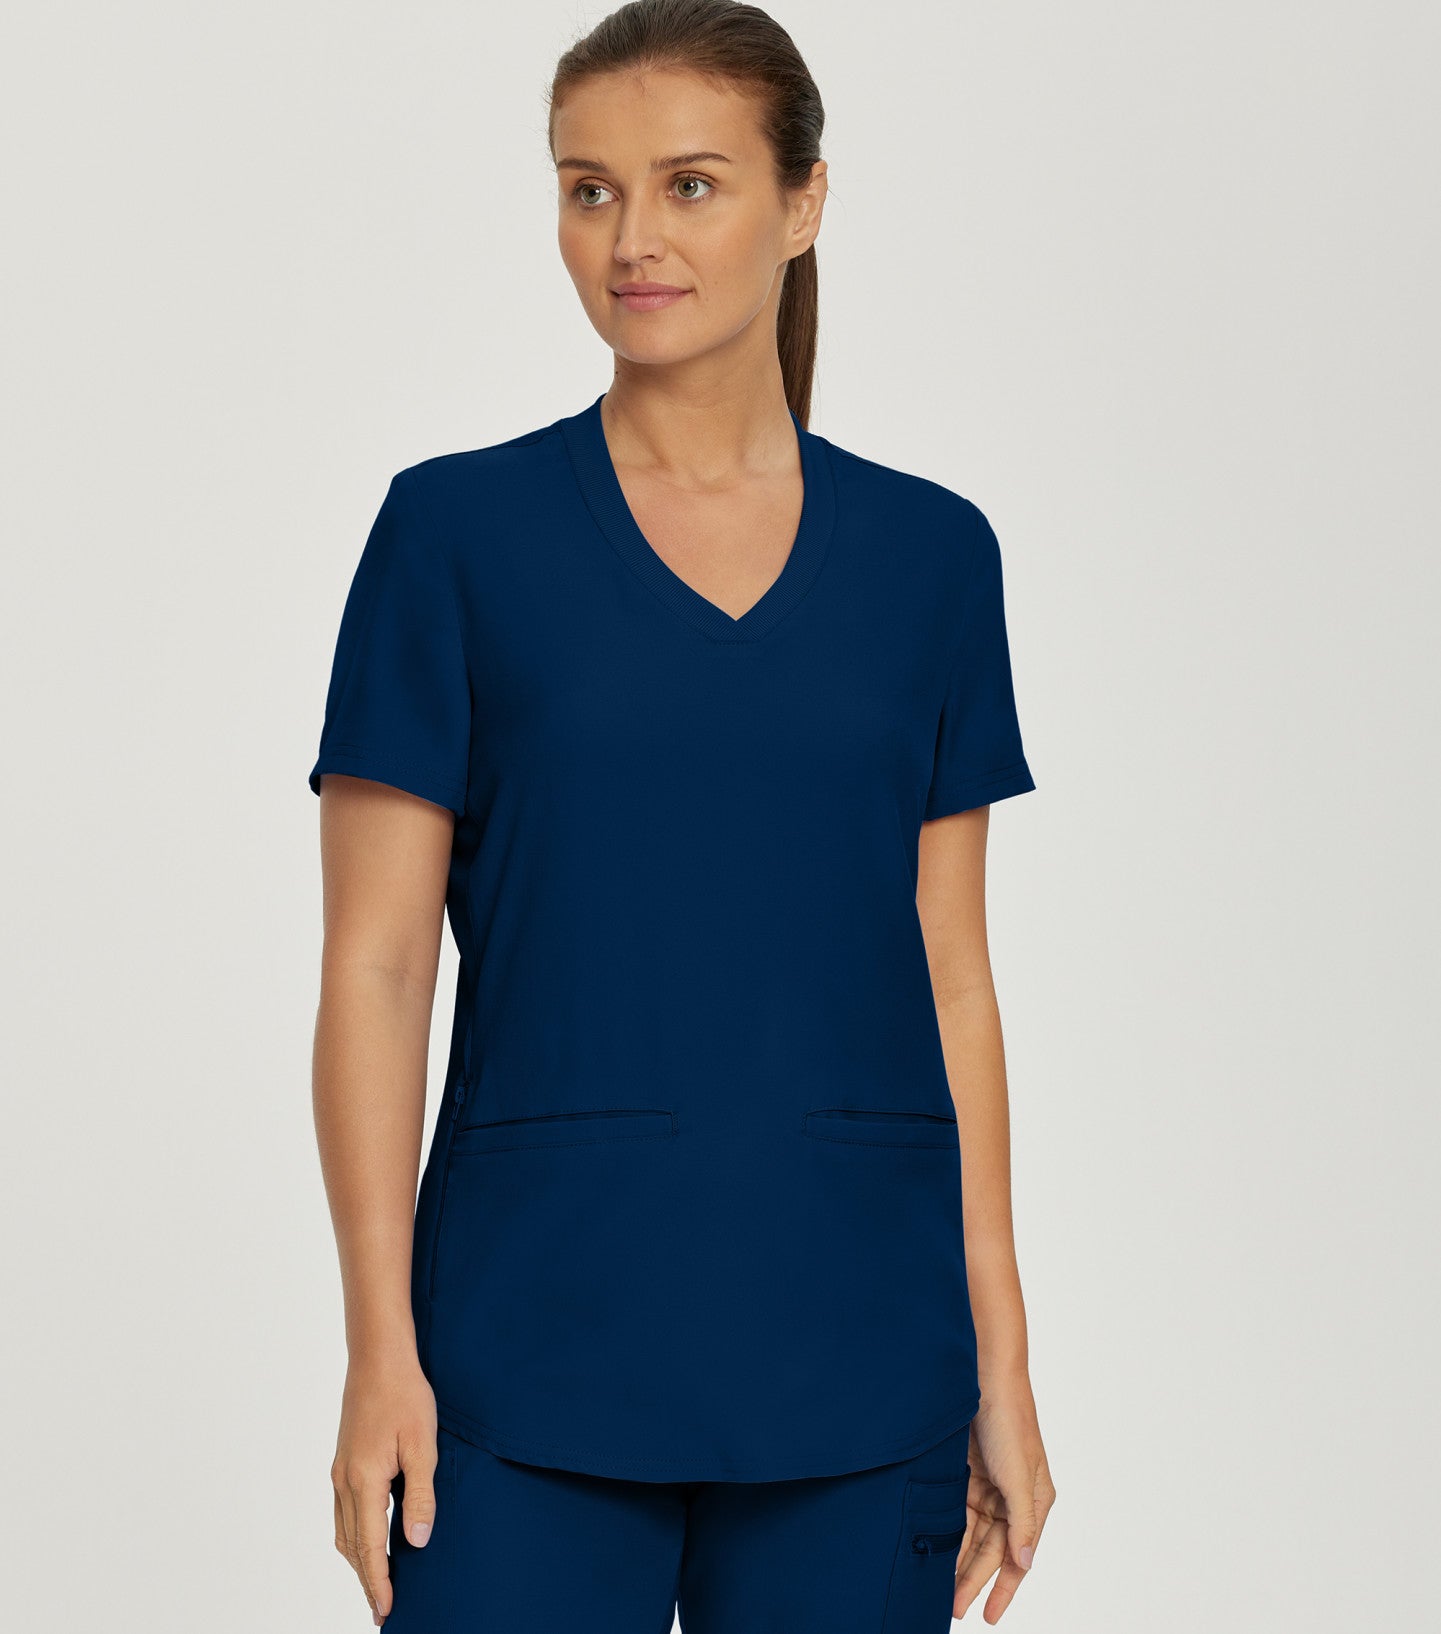 women's medical uniform tops, fashionable nurses uniforms, Women's Landau Forward 3-Pocket V-Neck Scrub Top